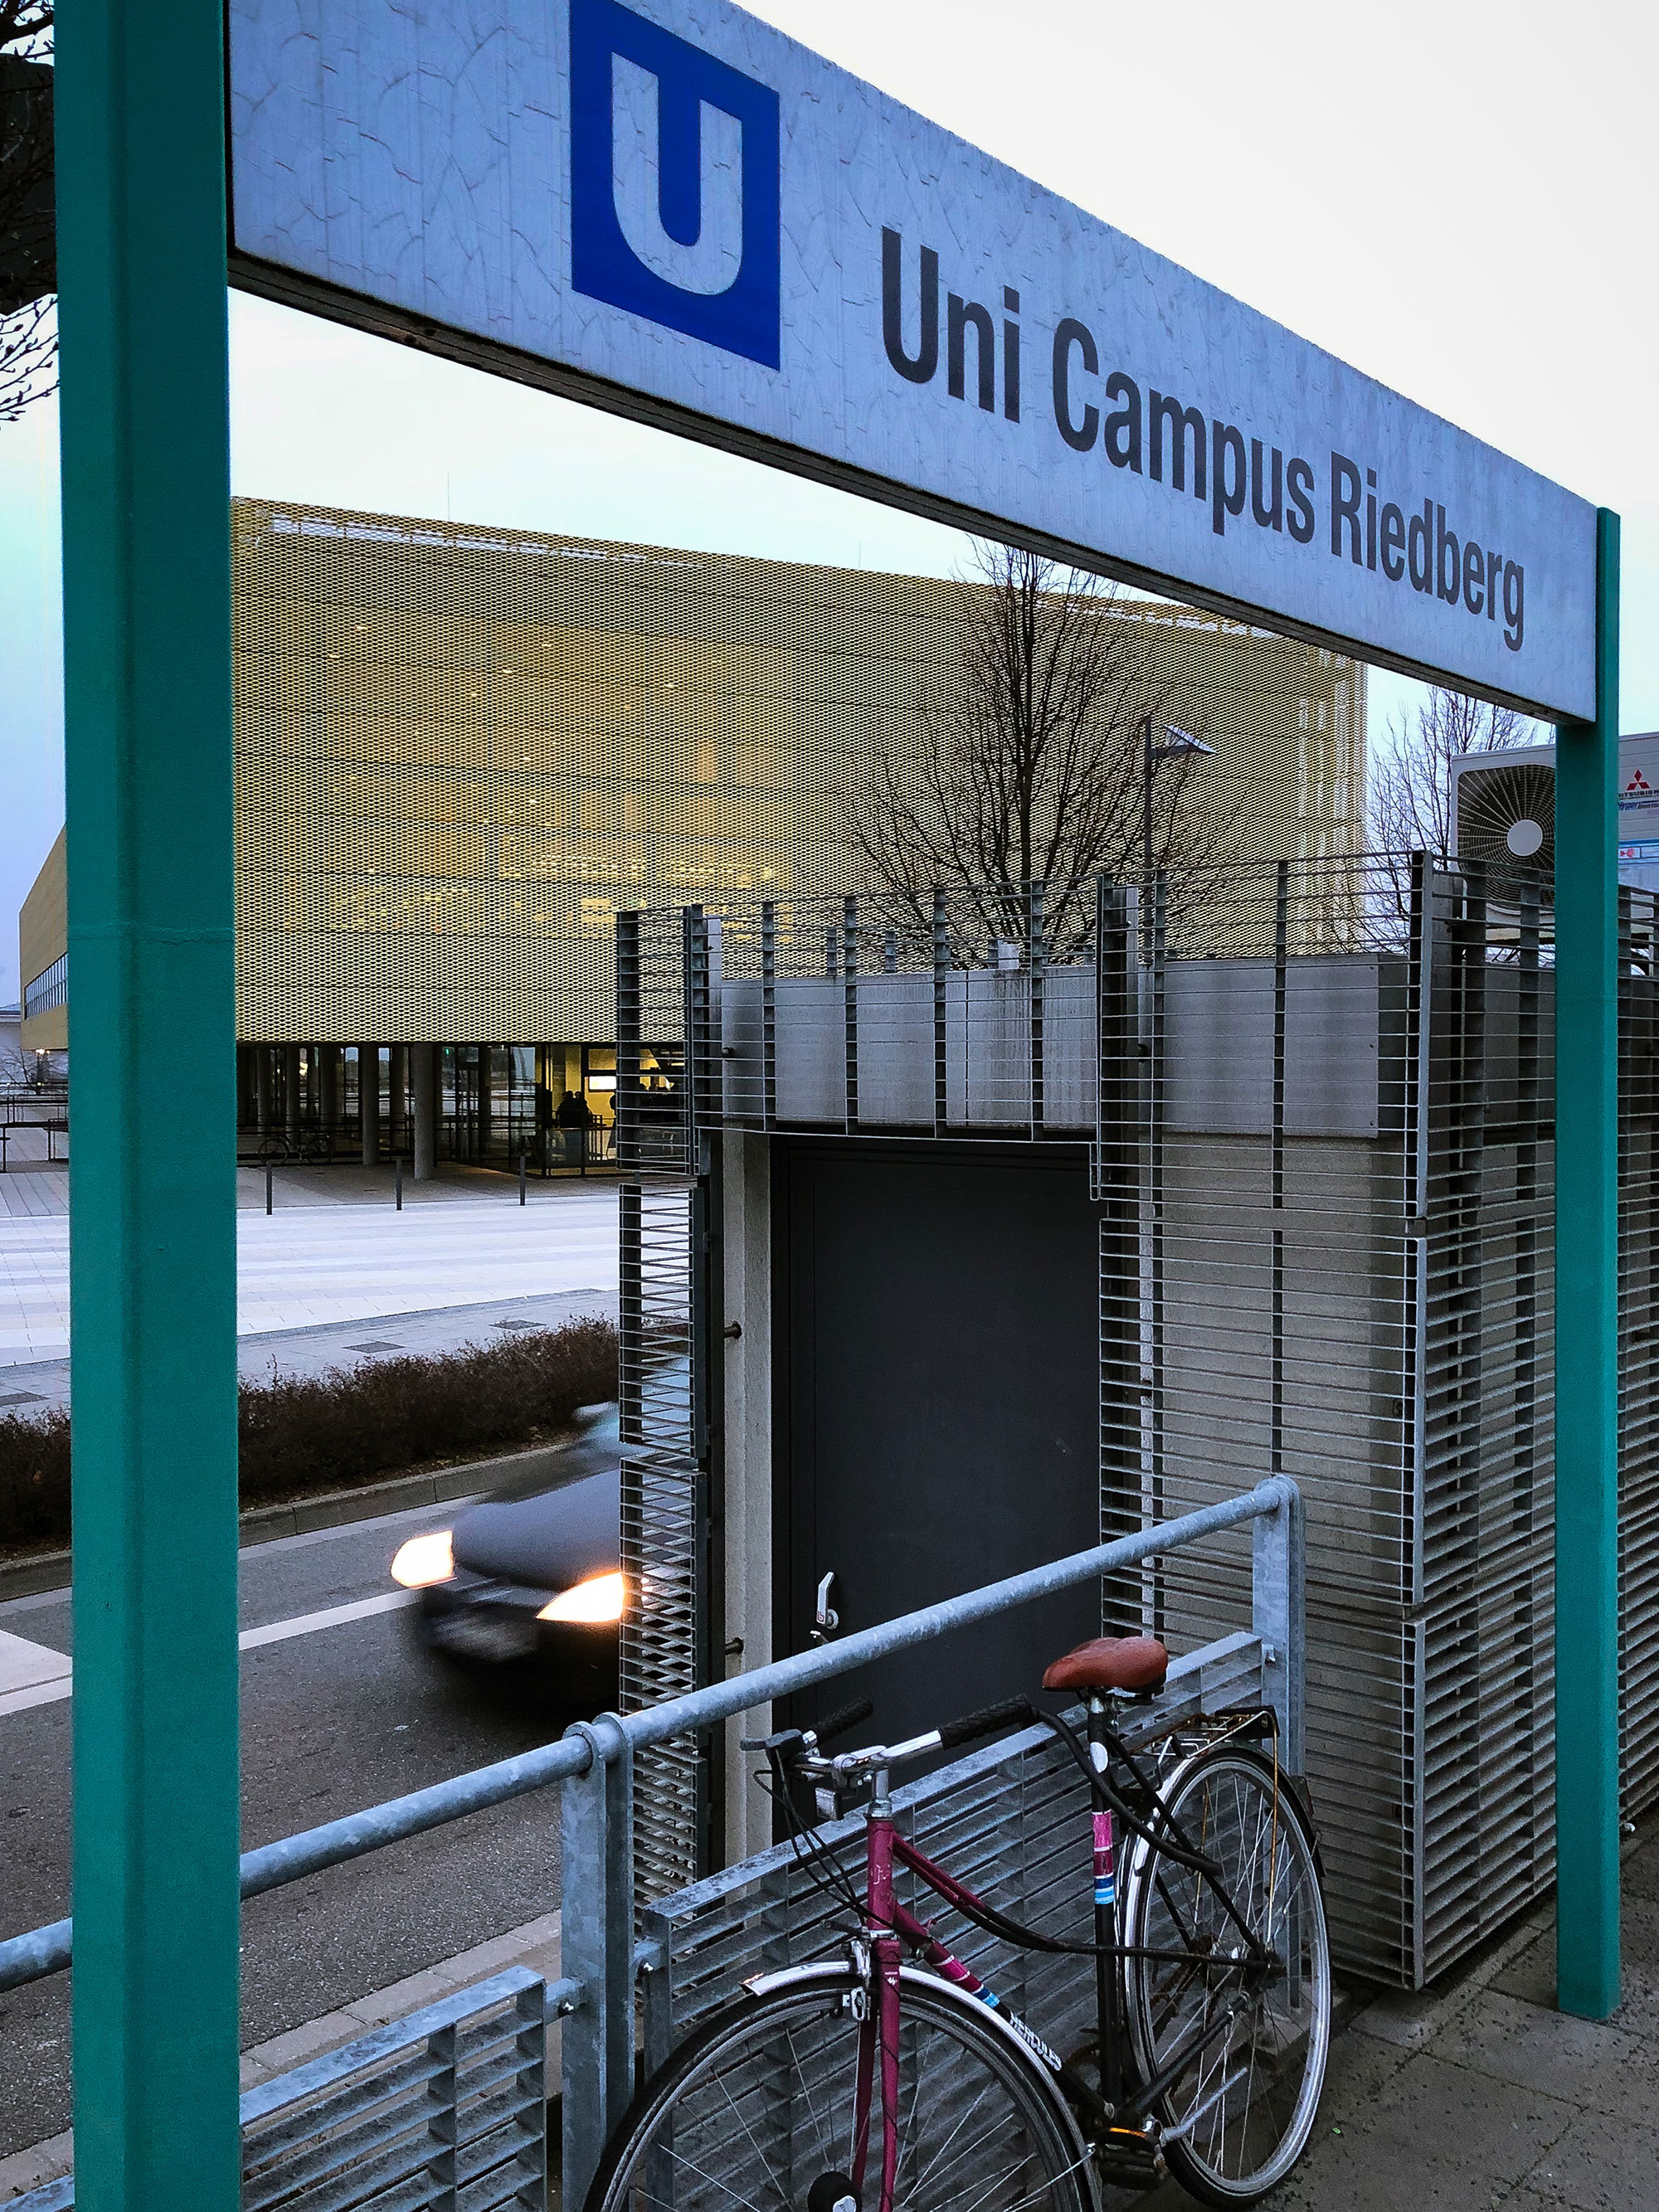 Goethe Universitat Mainstudy Campus Riedberg